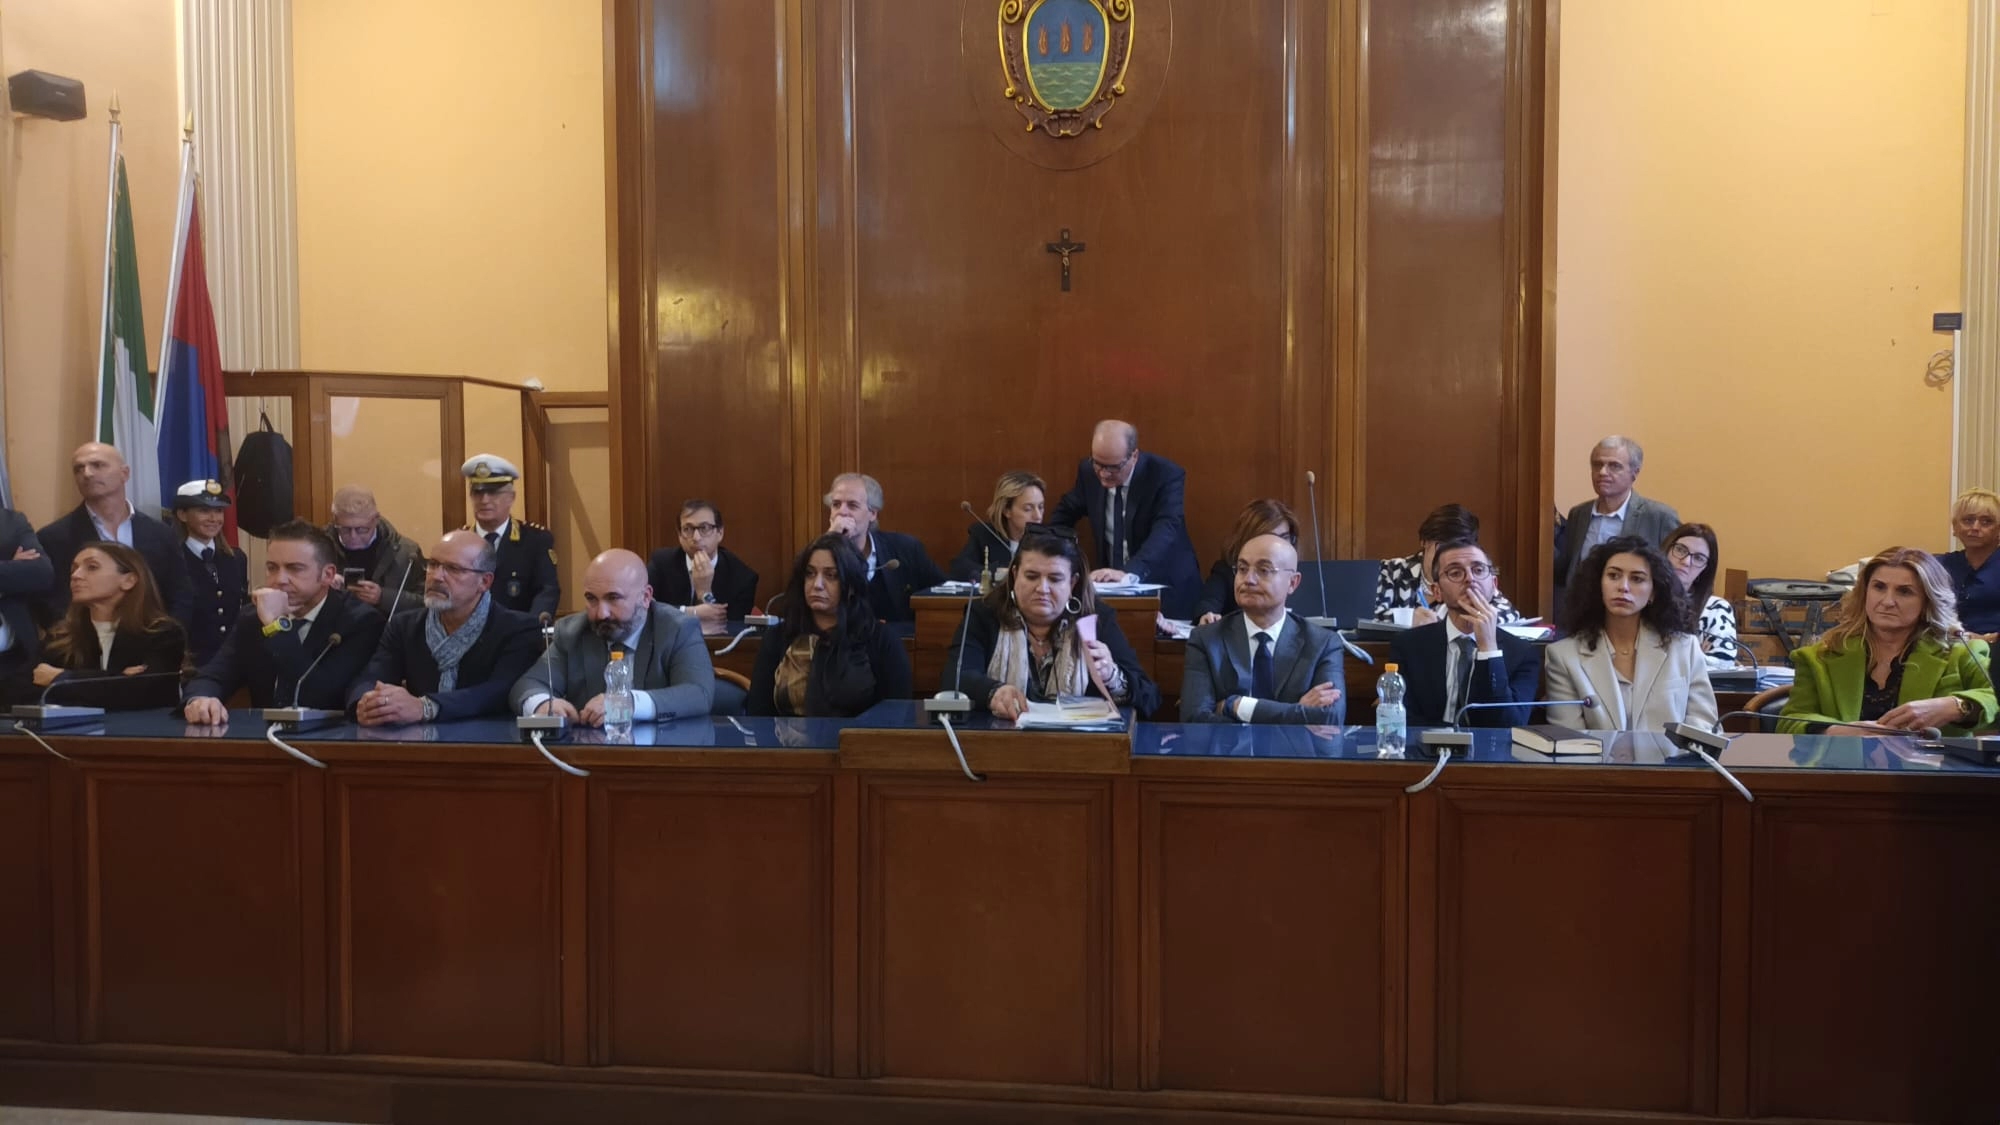 Foggia: Episcopo blinda la Giunta e i socialisti disertano la seduta consiliare